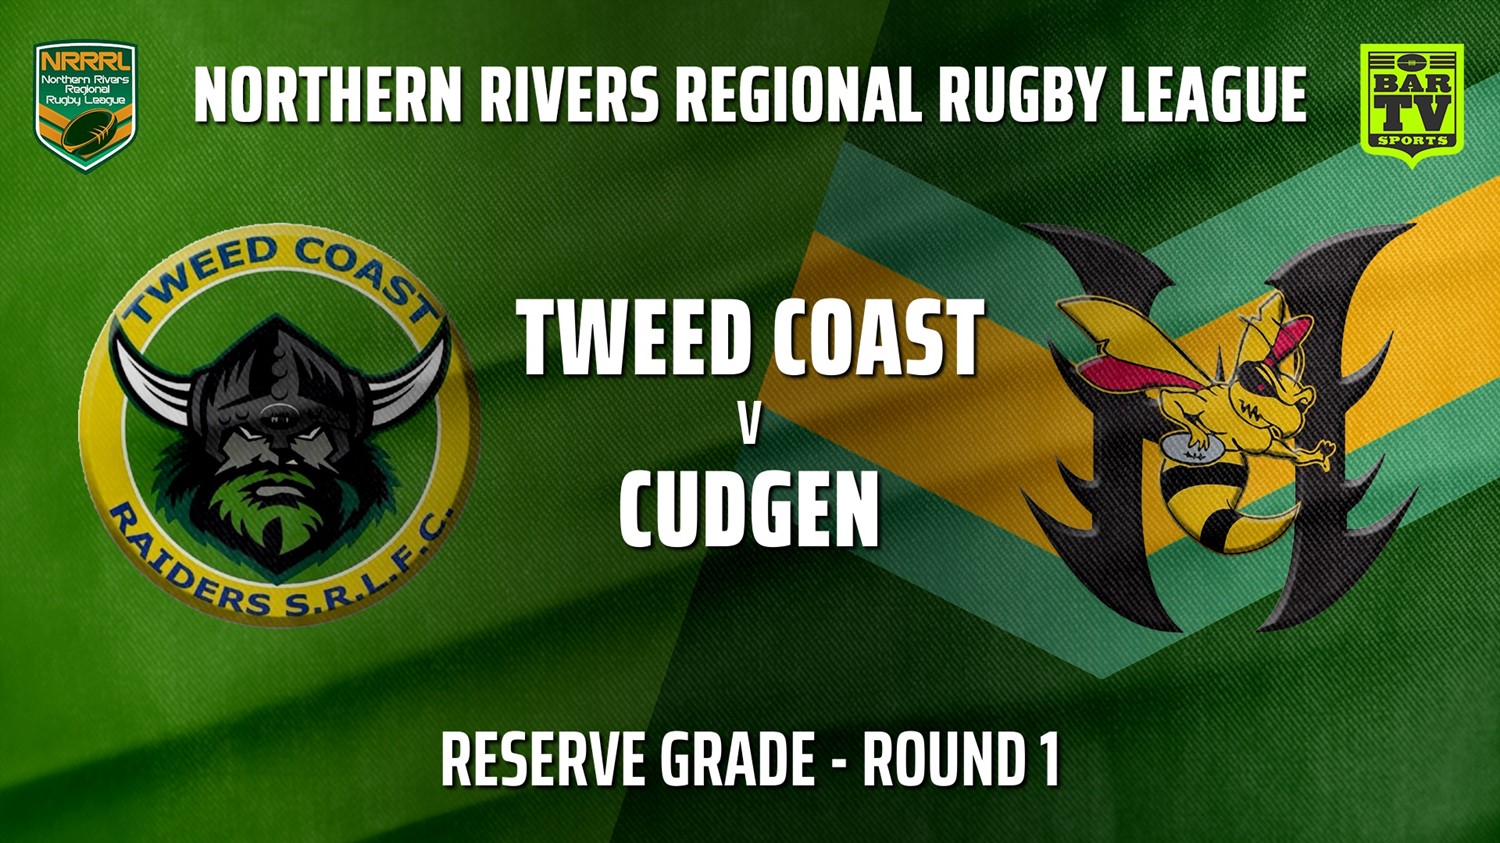 210502-NRRRL Round 1 - Reserve Grade - Tweed Coast Raiders v Cudgen Hornets Slate Image